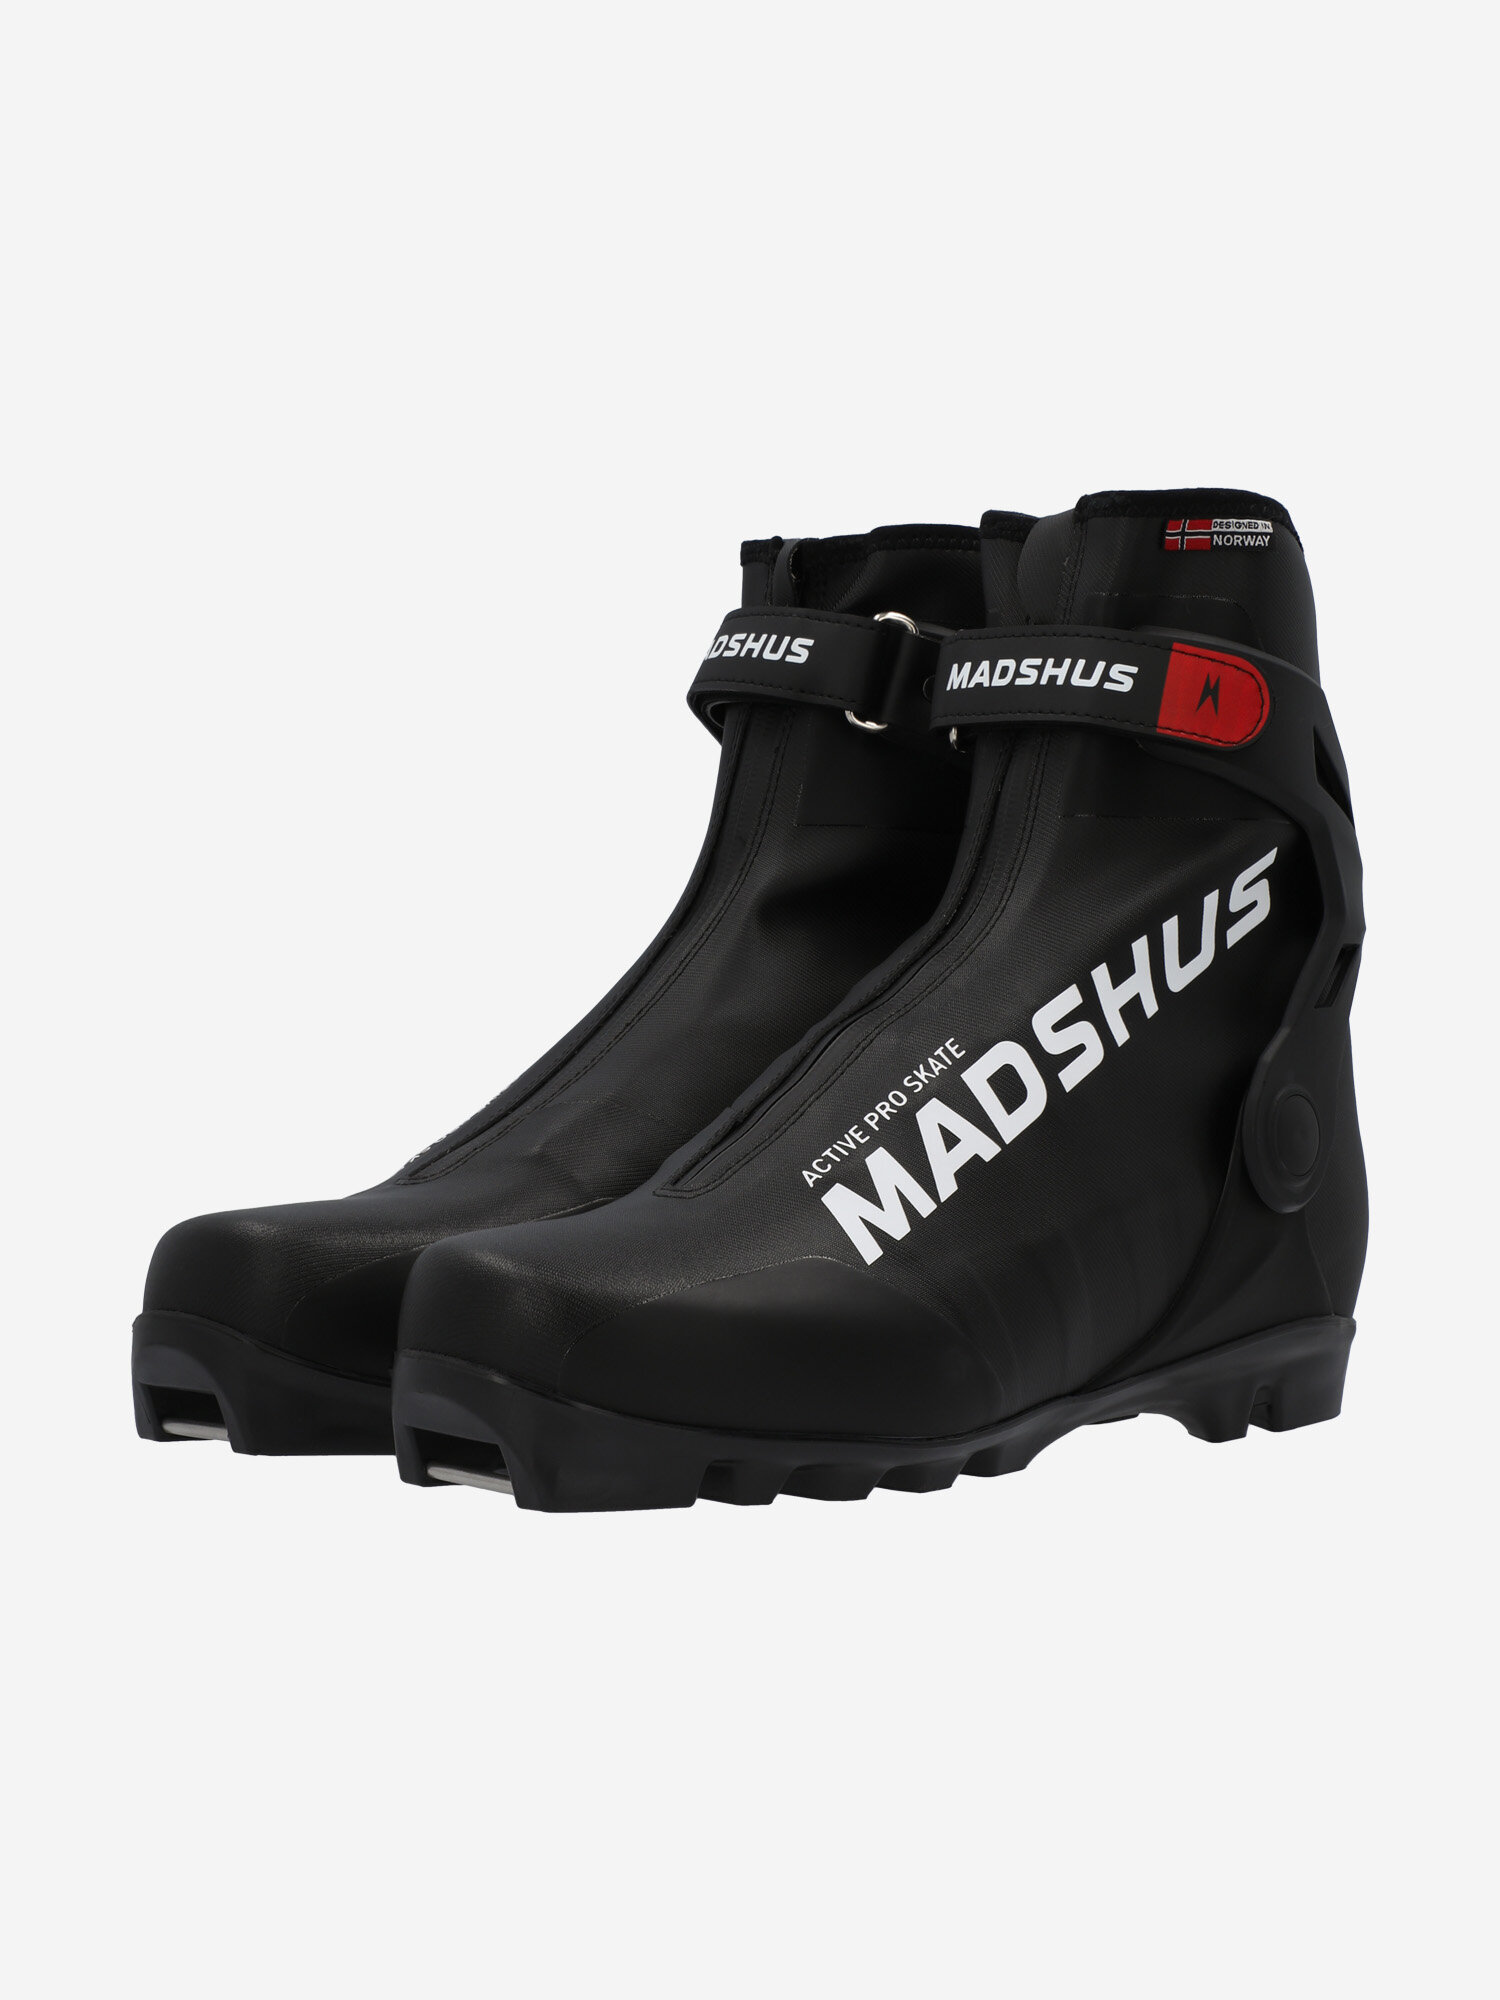 Ботинки для беговых лыж Madshus Active Pro Skate NNN Черный; RUS: 43, Ориг: 44